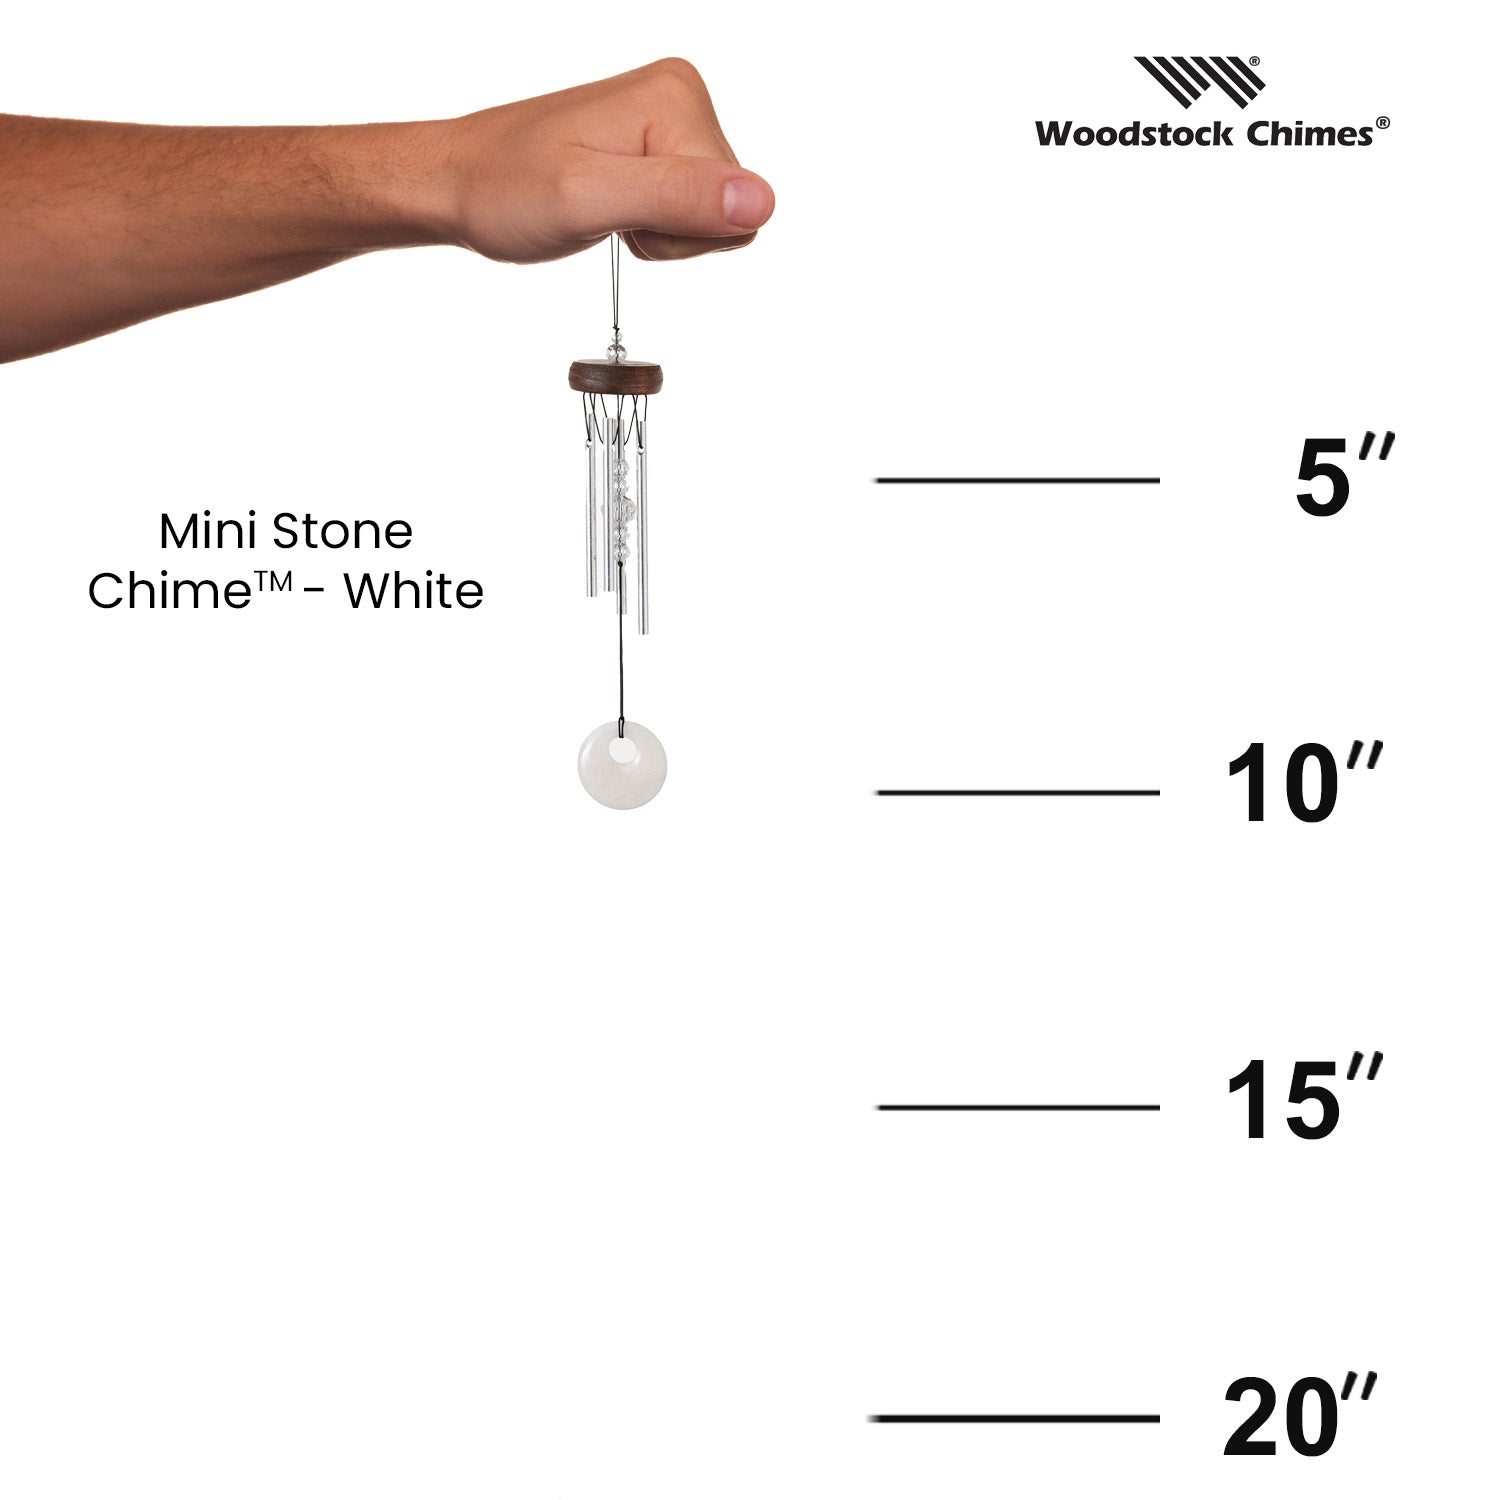 Mini Stone Chime™ - White proportion image